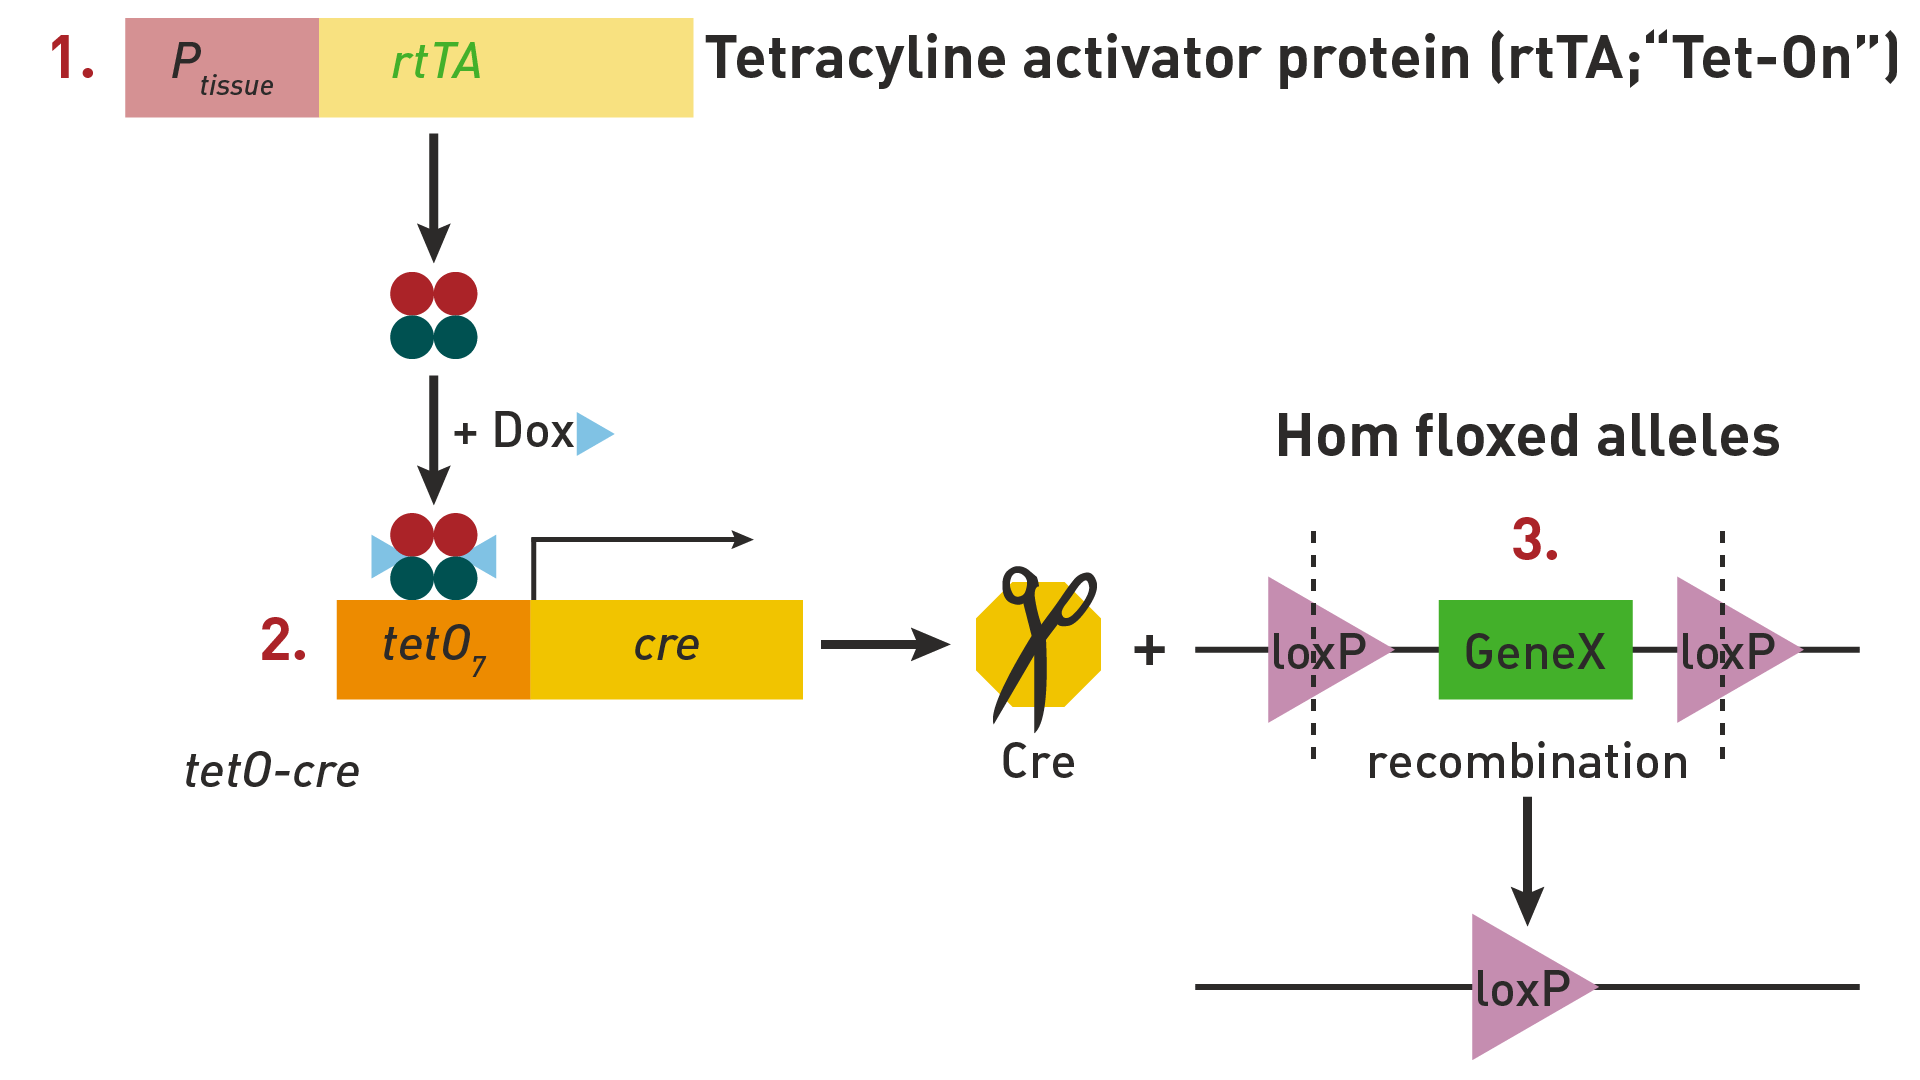 tetracycline activator protein